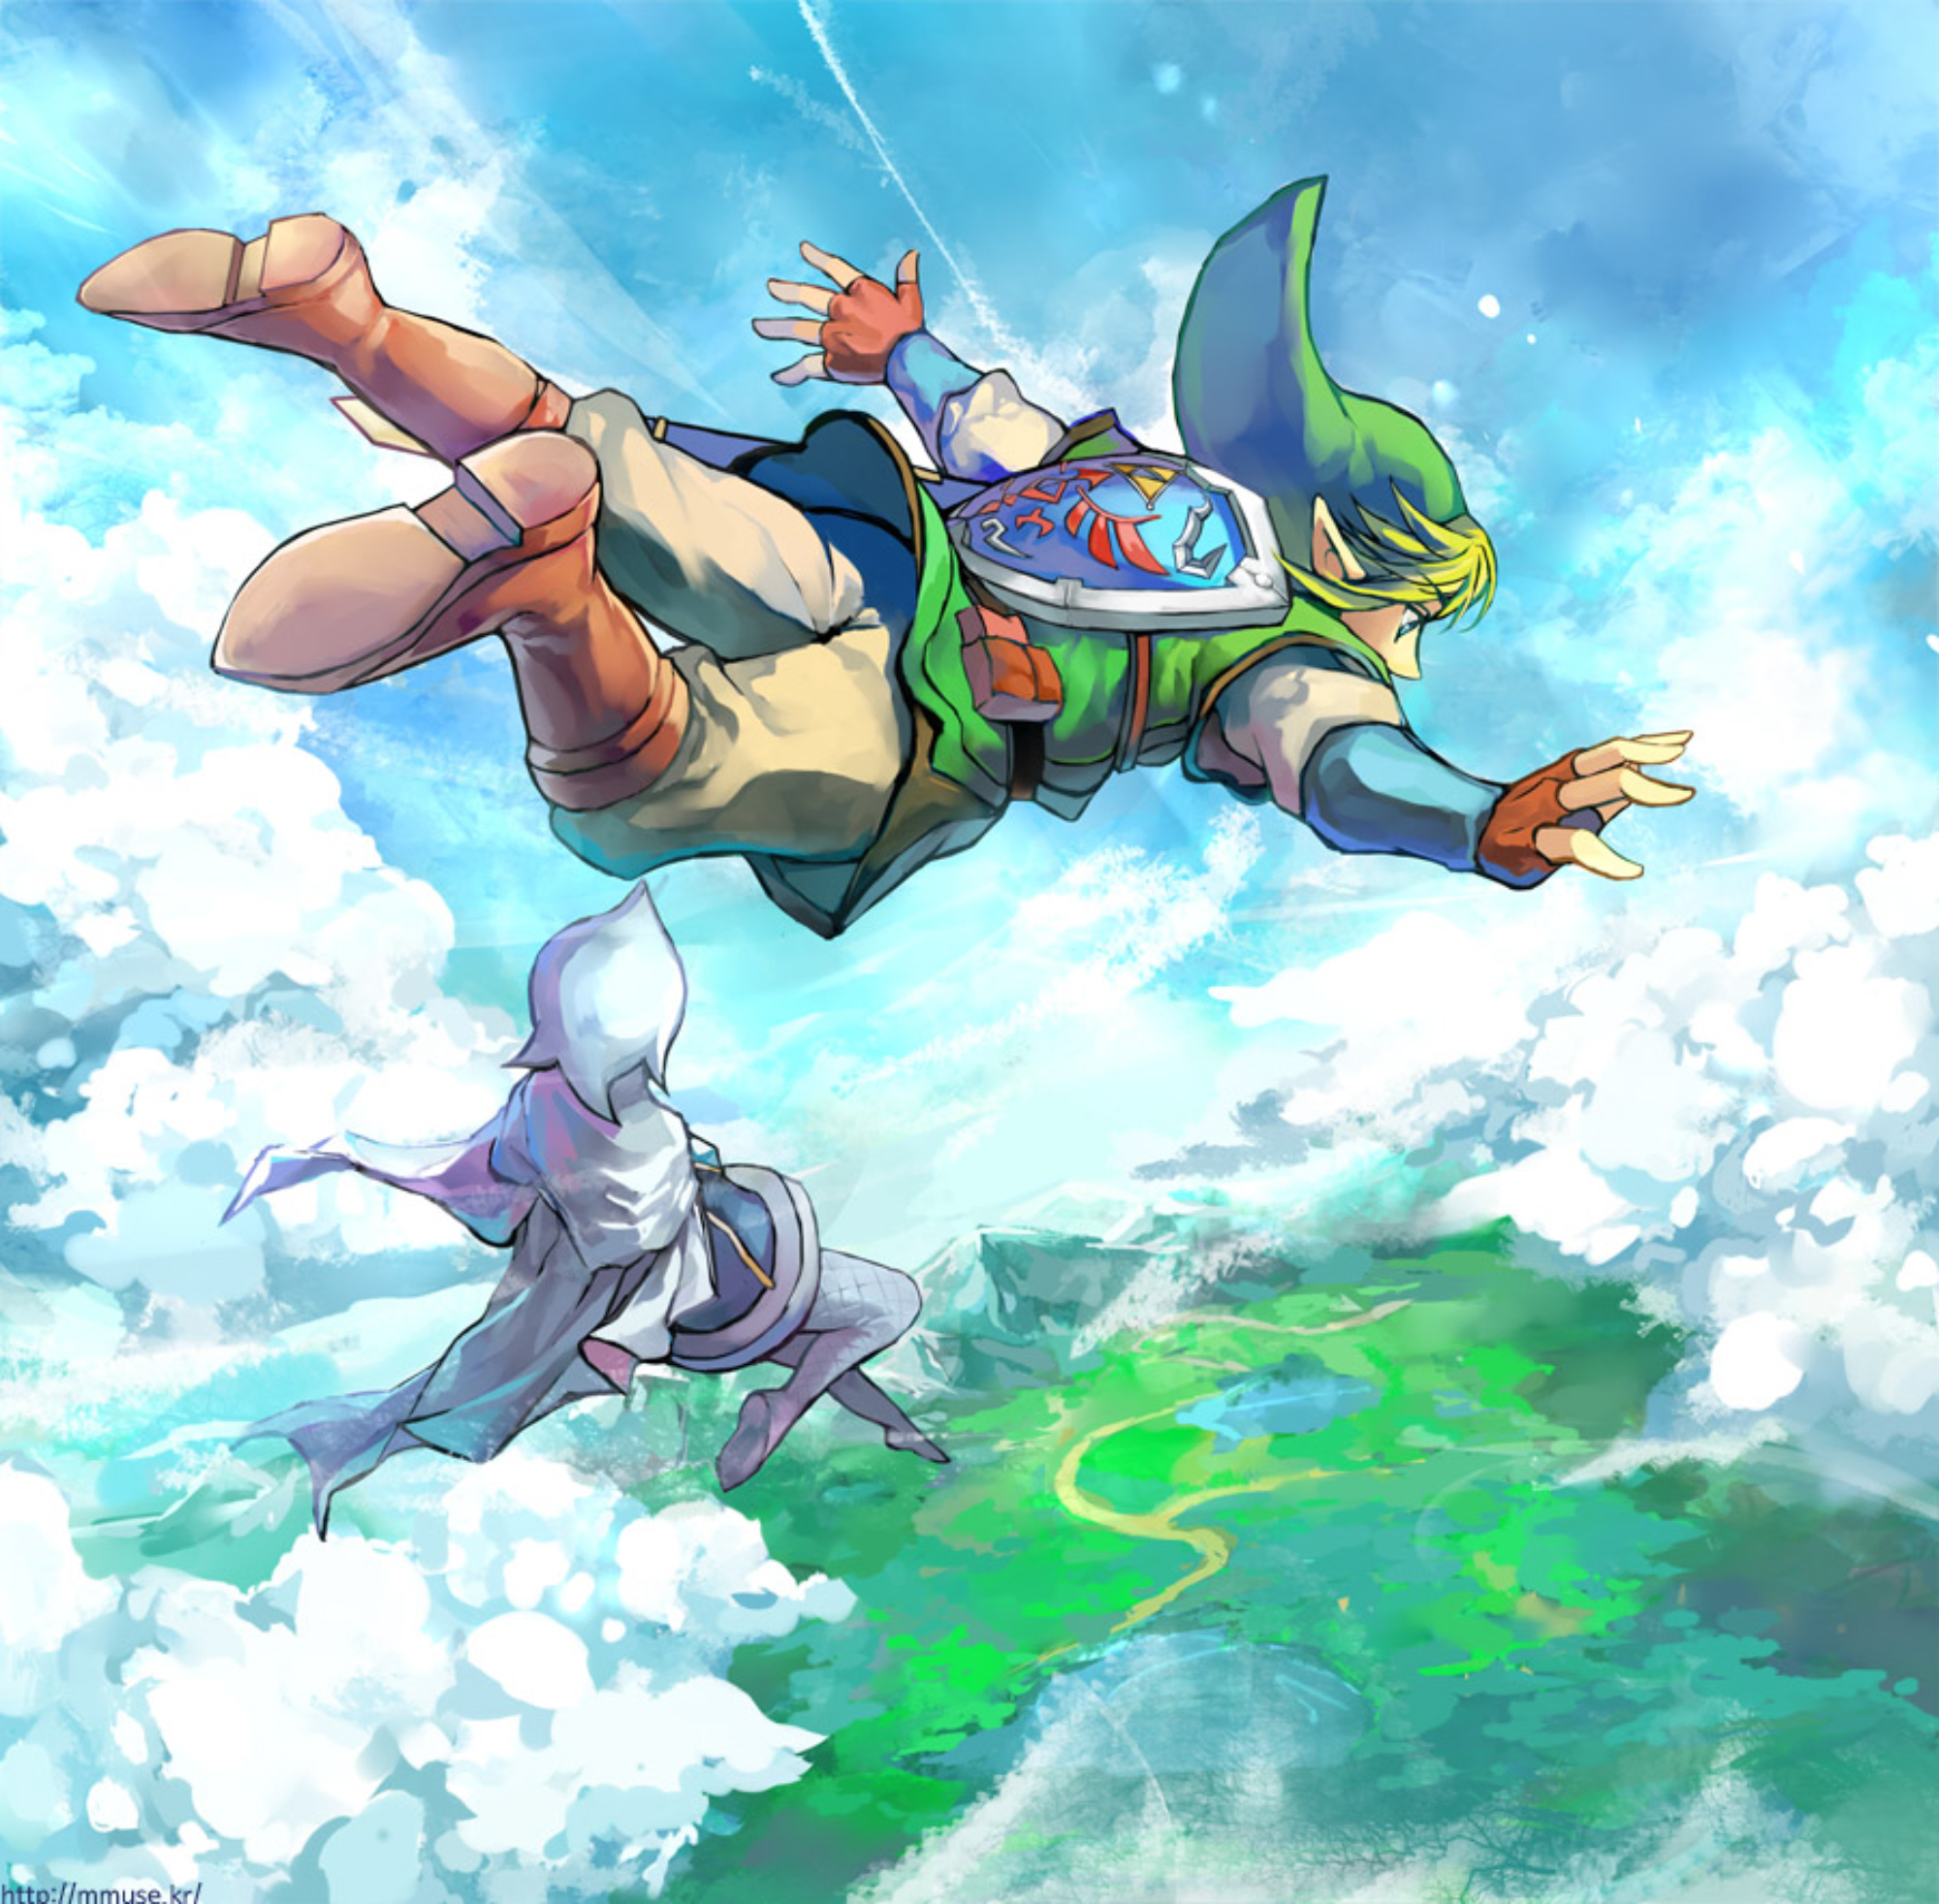 The Legend Of Zelda: Skyward Sword Backgrounds, Compatible - PC, Mobile, Gadgets| 2000x1964 px